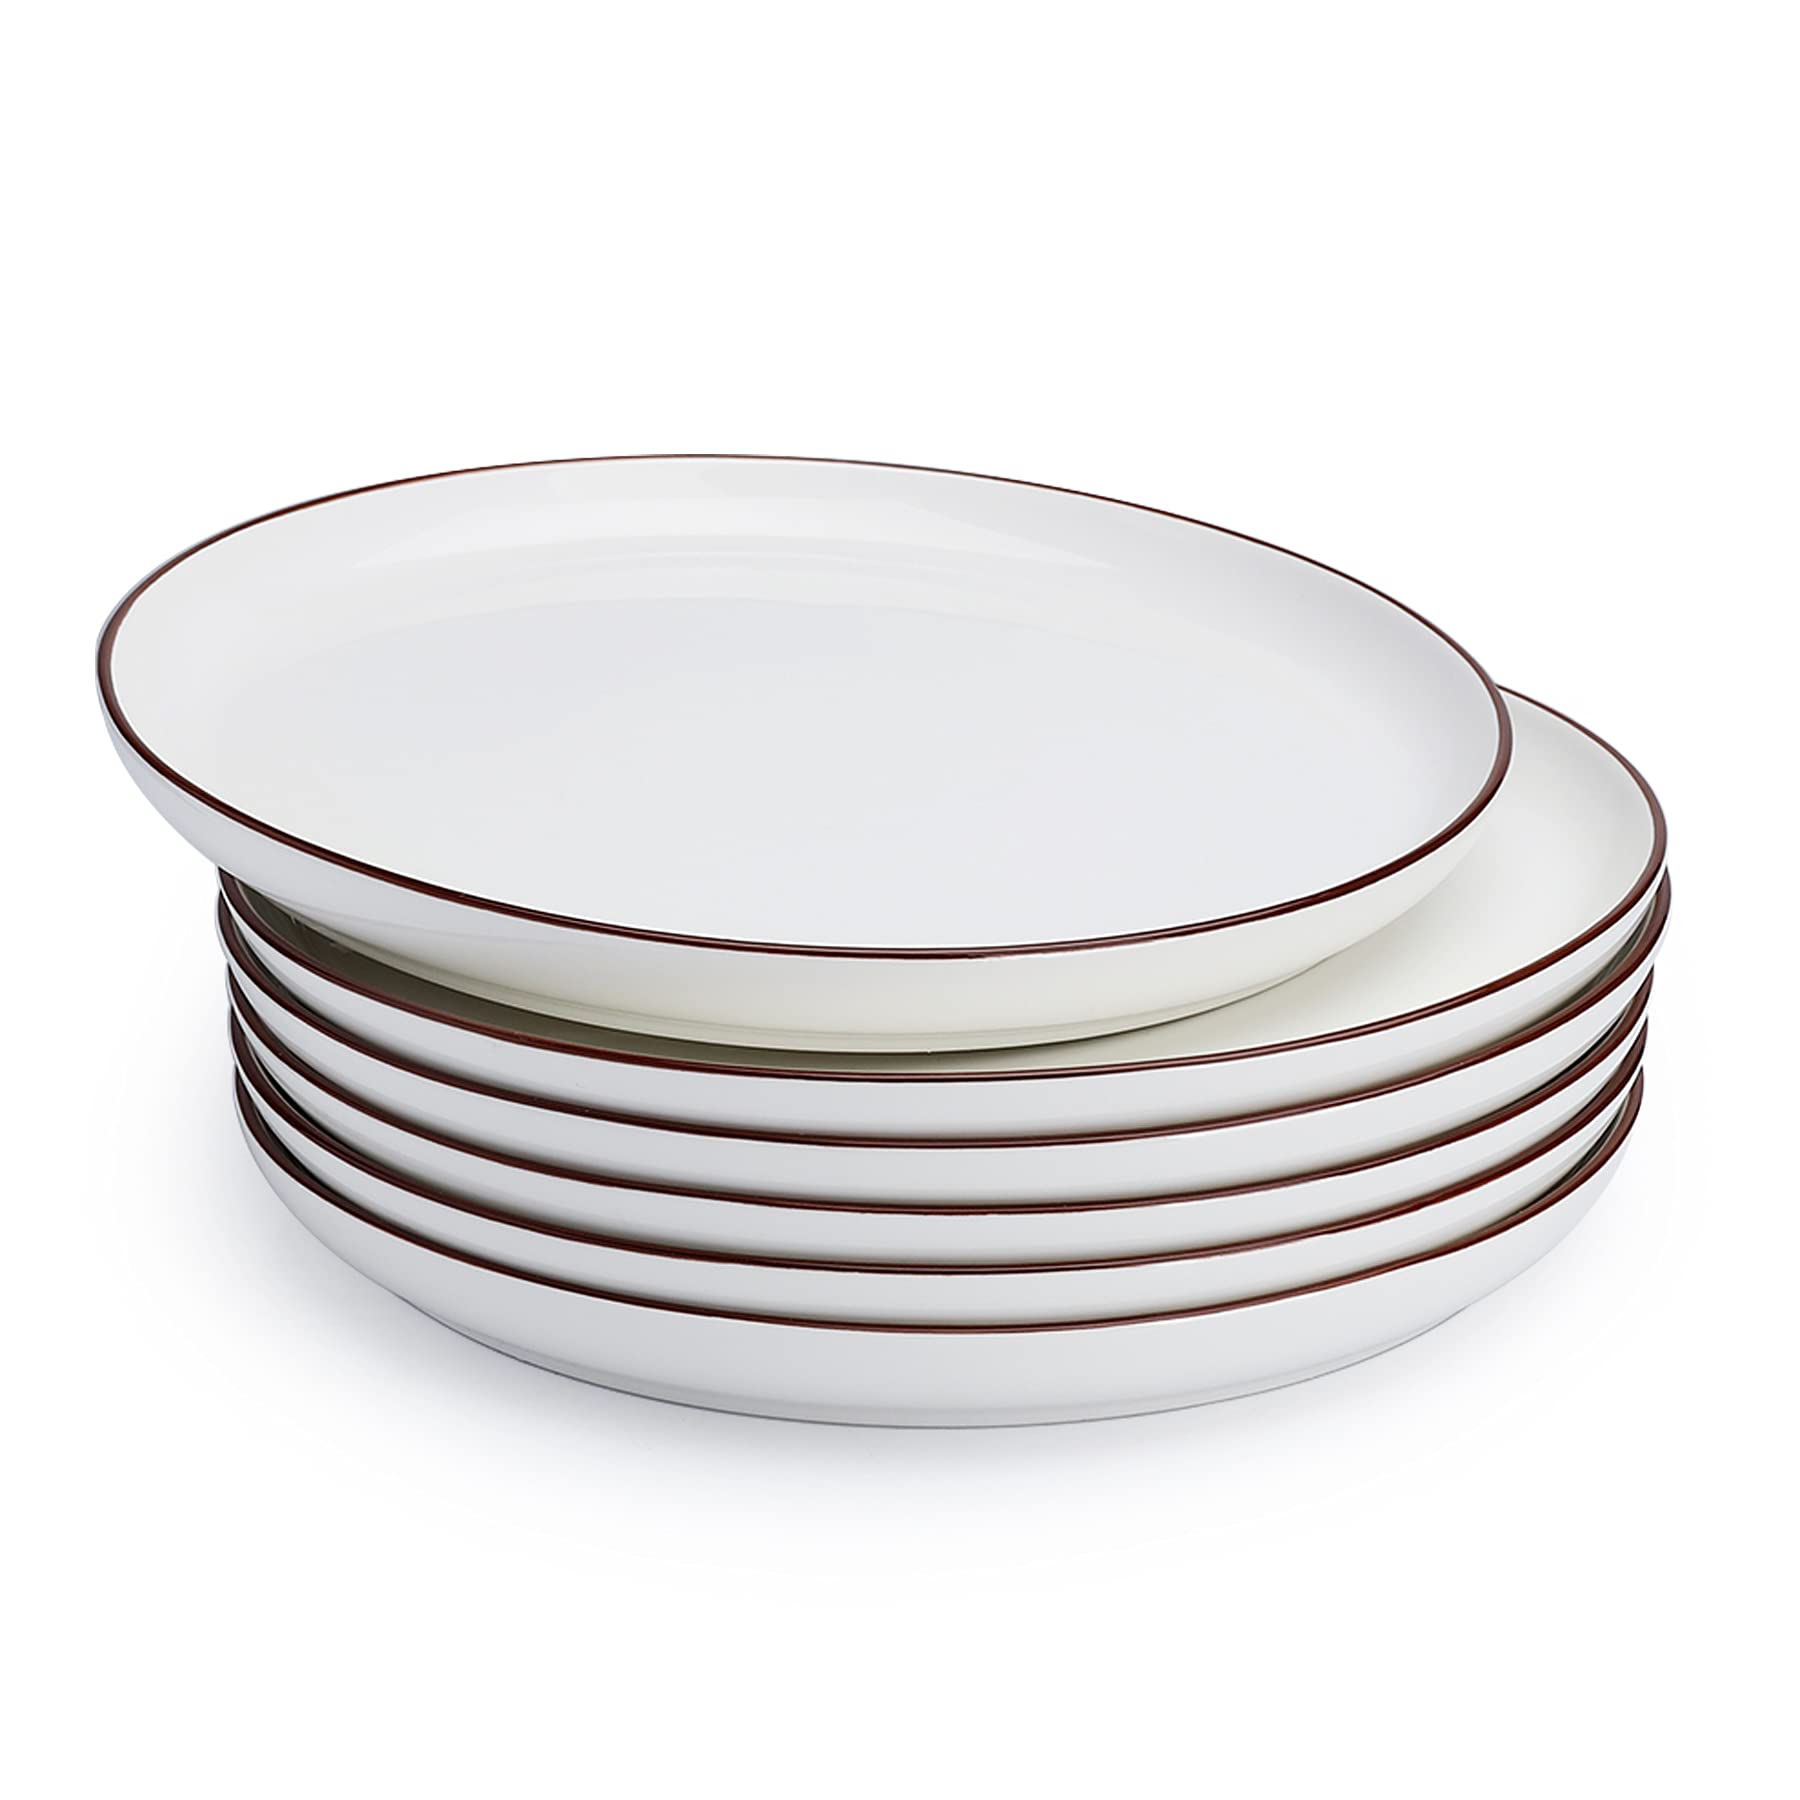 Sweese 164.001 Dinner Plates 10 Inches - Porcelain Salad Serving Dishes for Kitchen - Round Minimalist Design - Microwave Dishwasher Oven Safe Dinn...